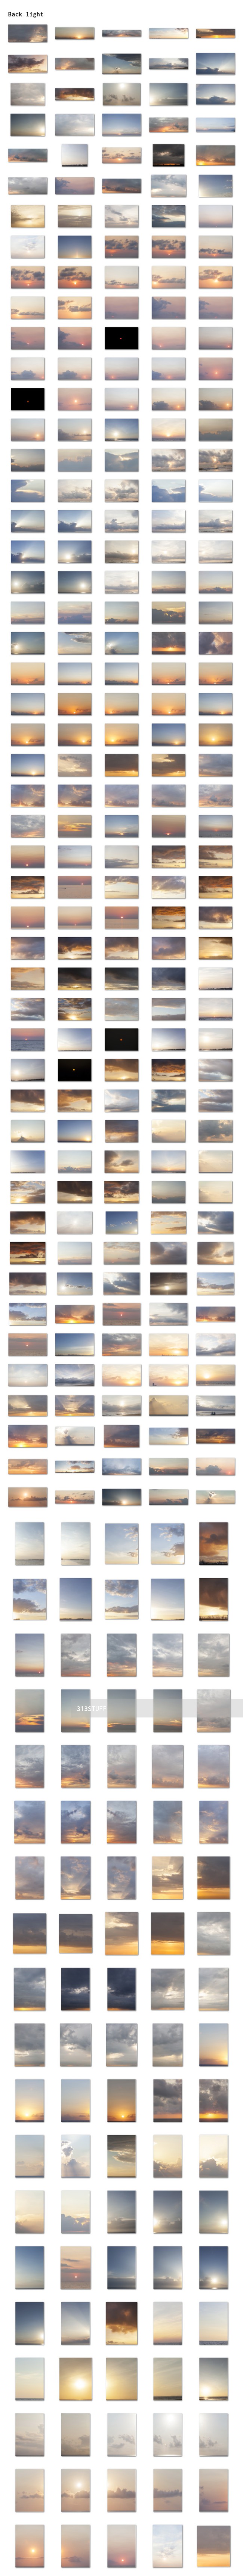 750+ photos of sunset skies